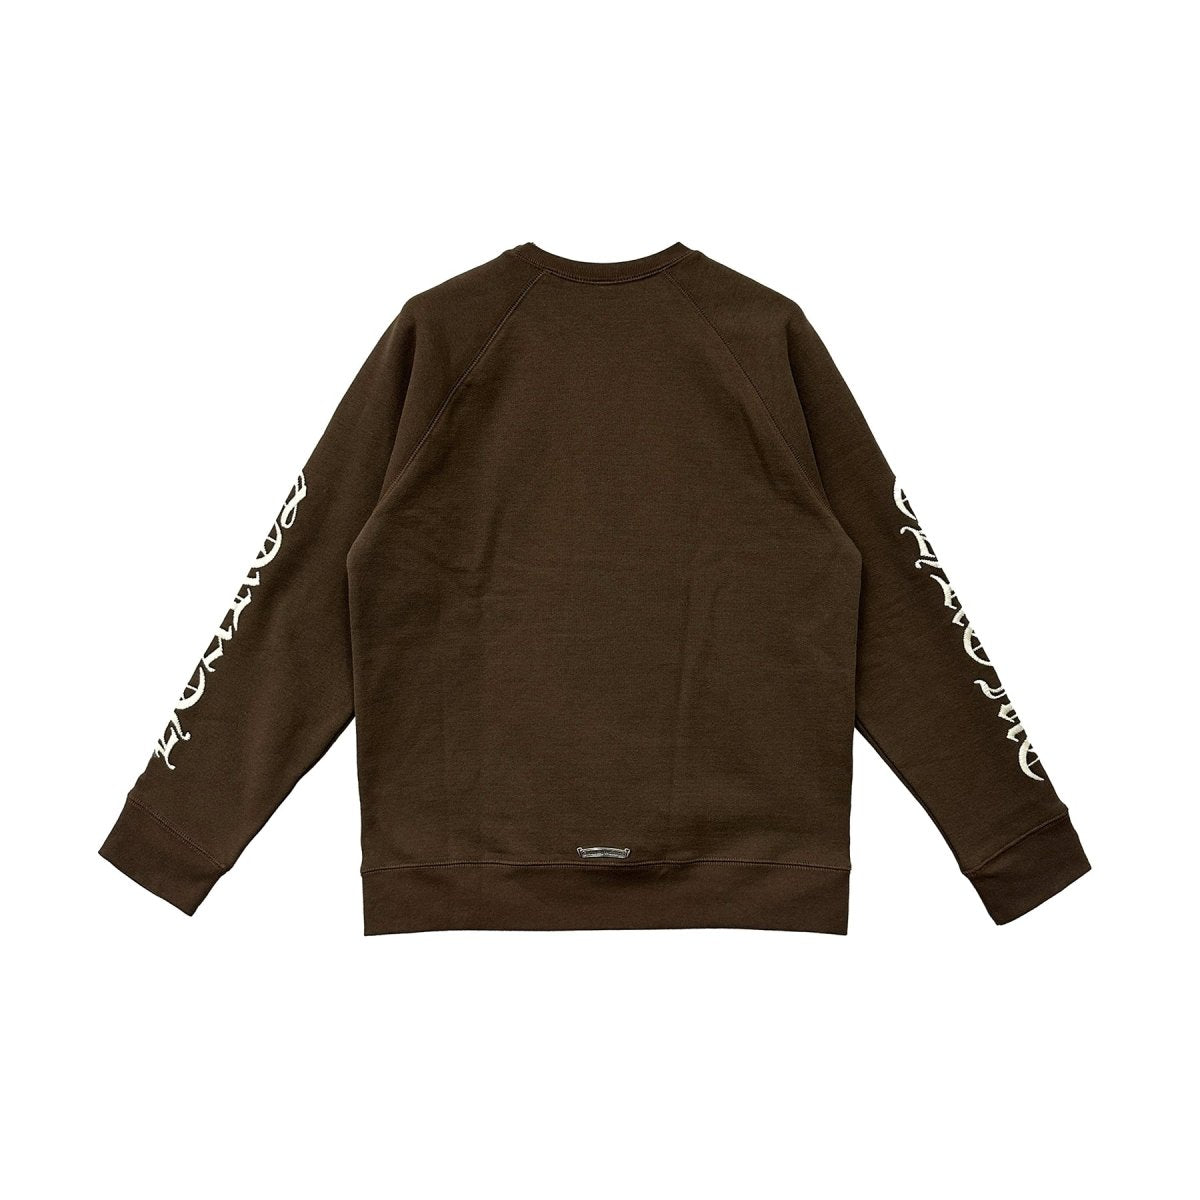 Chrome Hearts Embroidered Brown Sweatshirt - SHENGLI ROAD MARKET